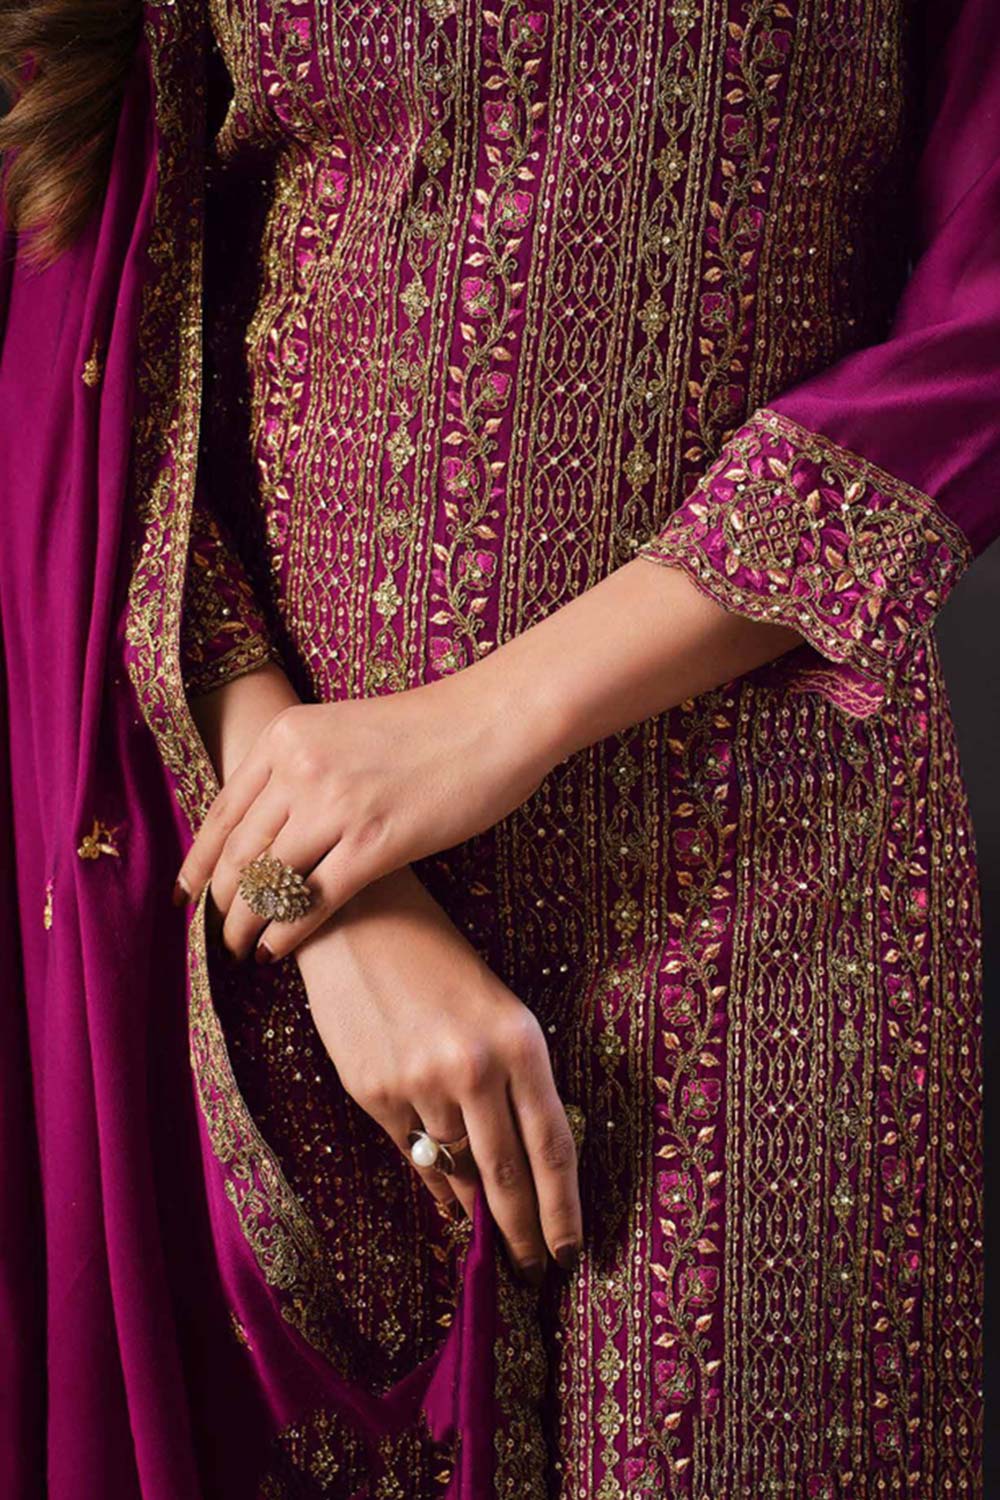 Purple rangoli silk embroidered salwar suit for women